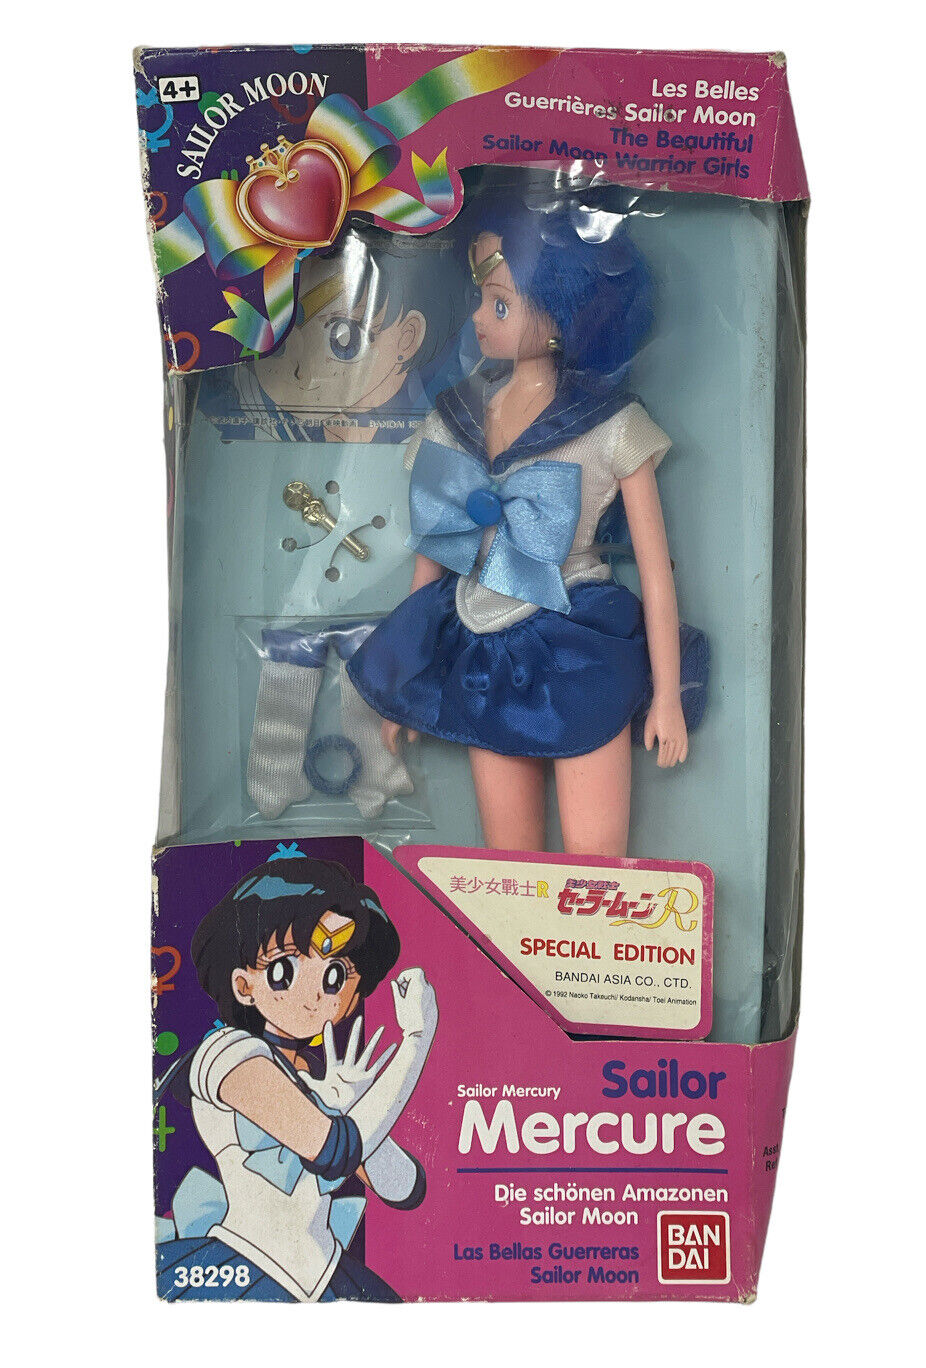 1992 - 1996 Vintage Bandai Sailor Moon - Sailor Mercury, 38402 [As Is]